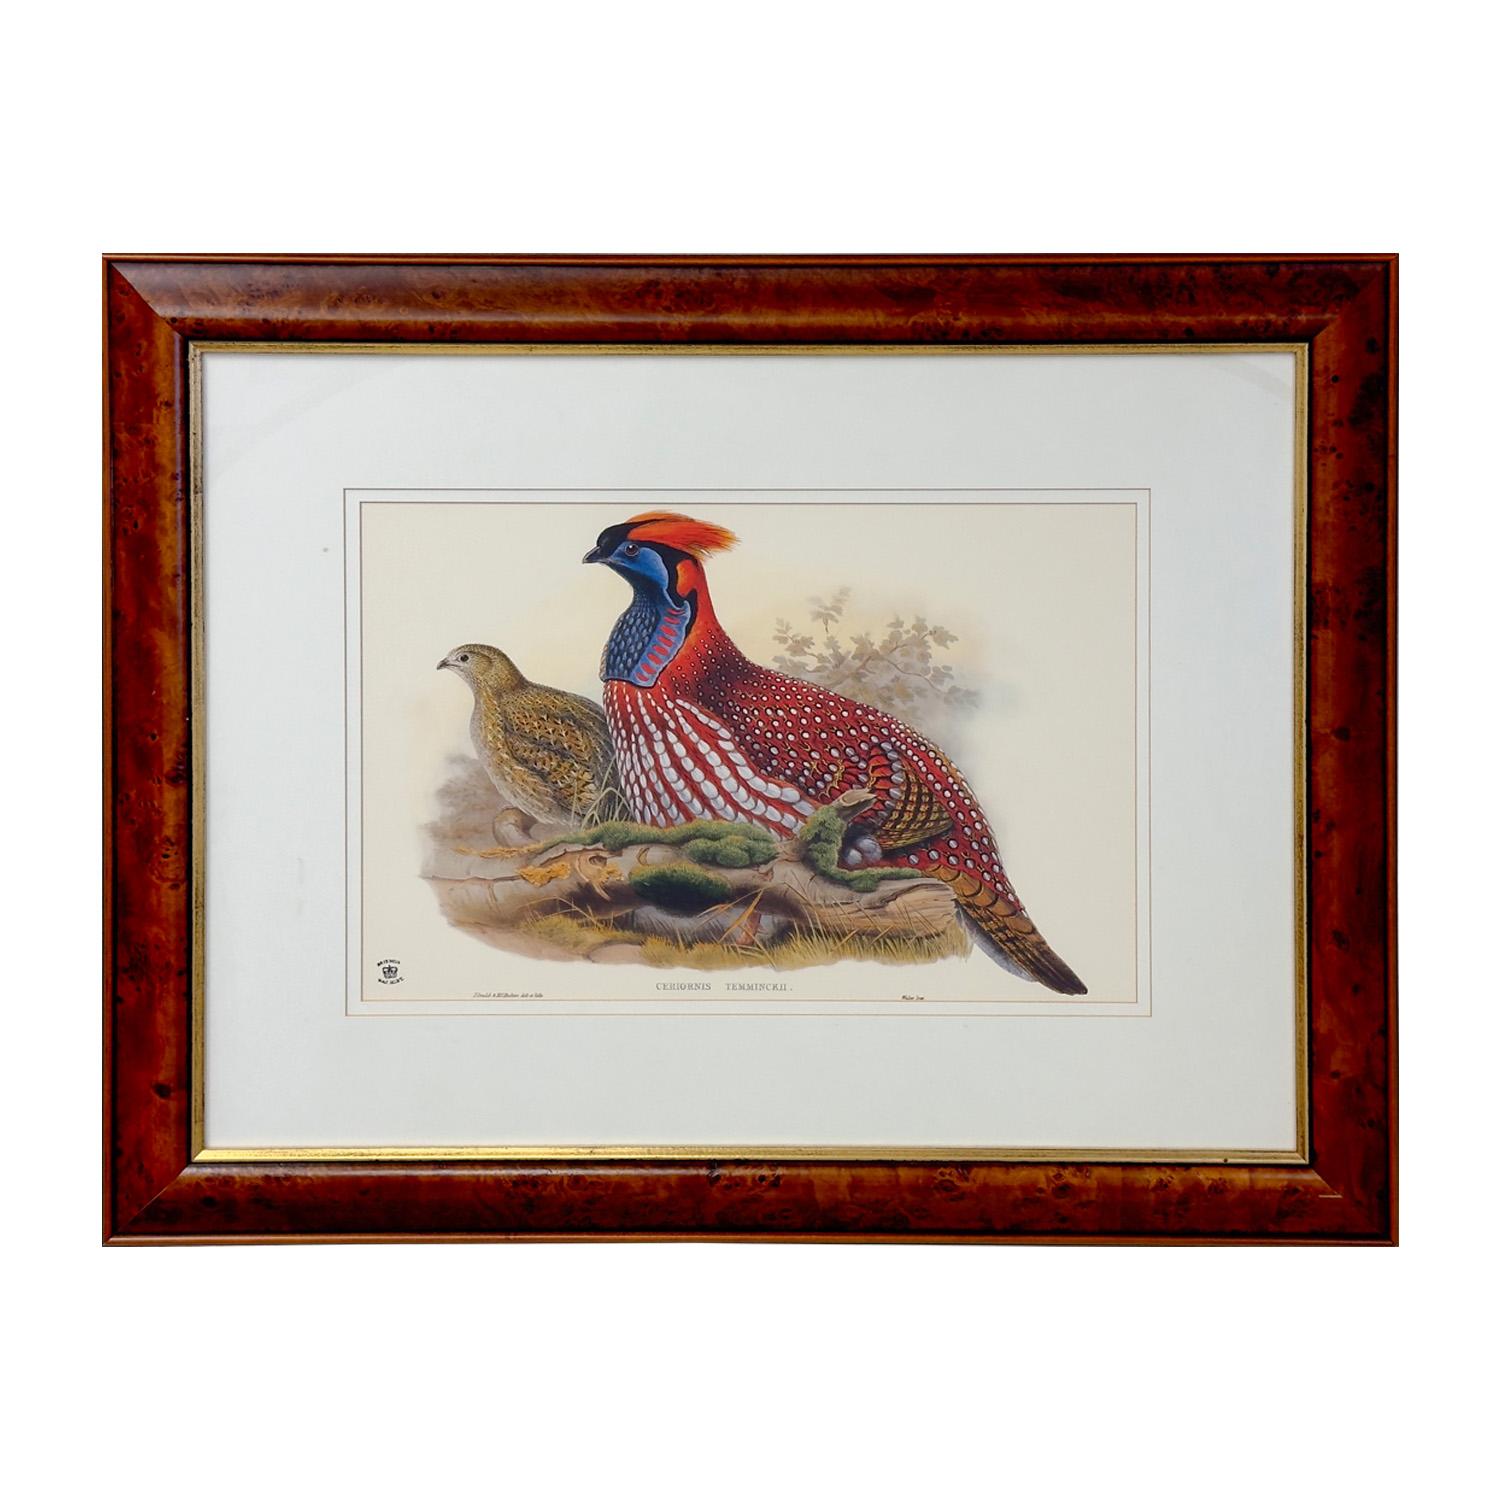  John Gould & Henry Constantine Richter Birds of Asia Temminck's Tragopan Print 